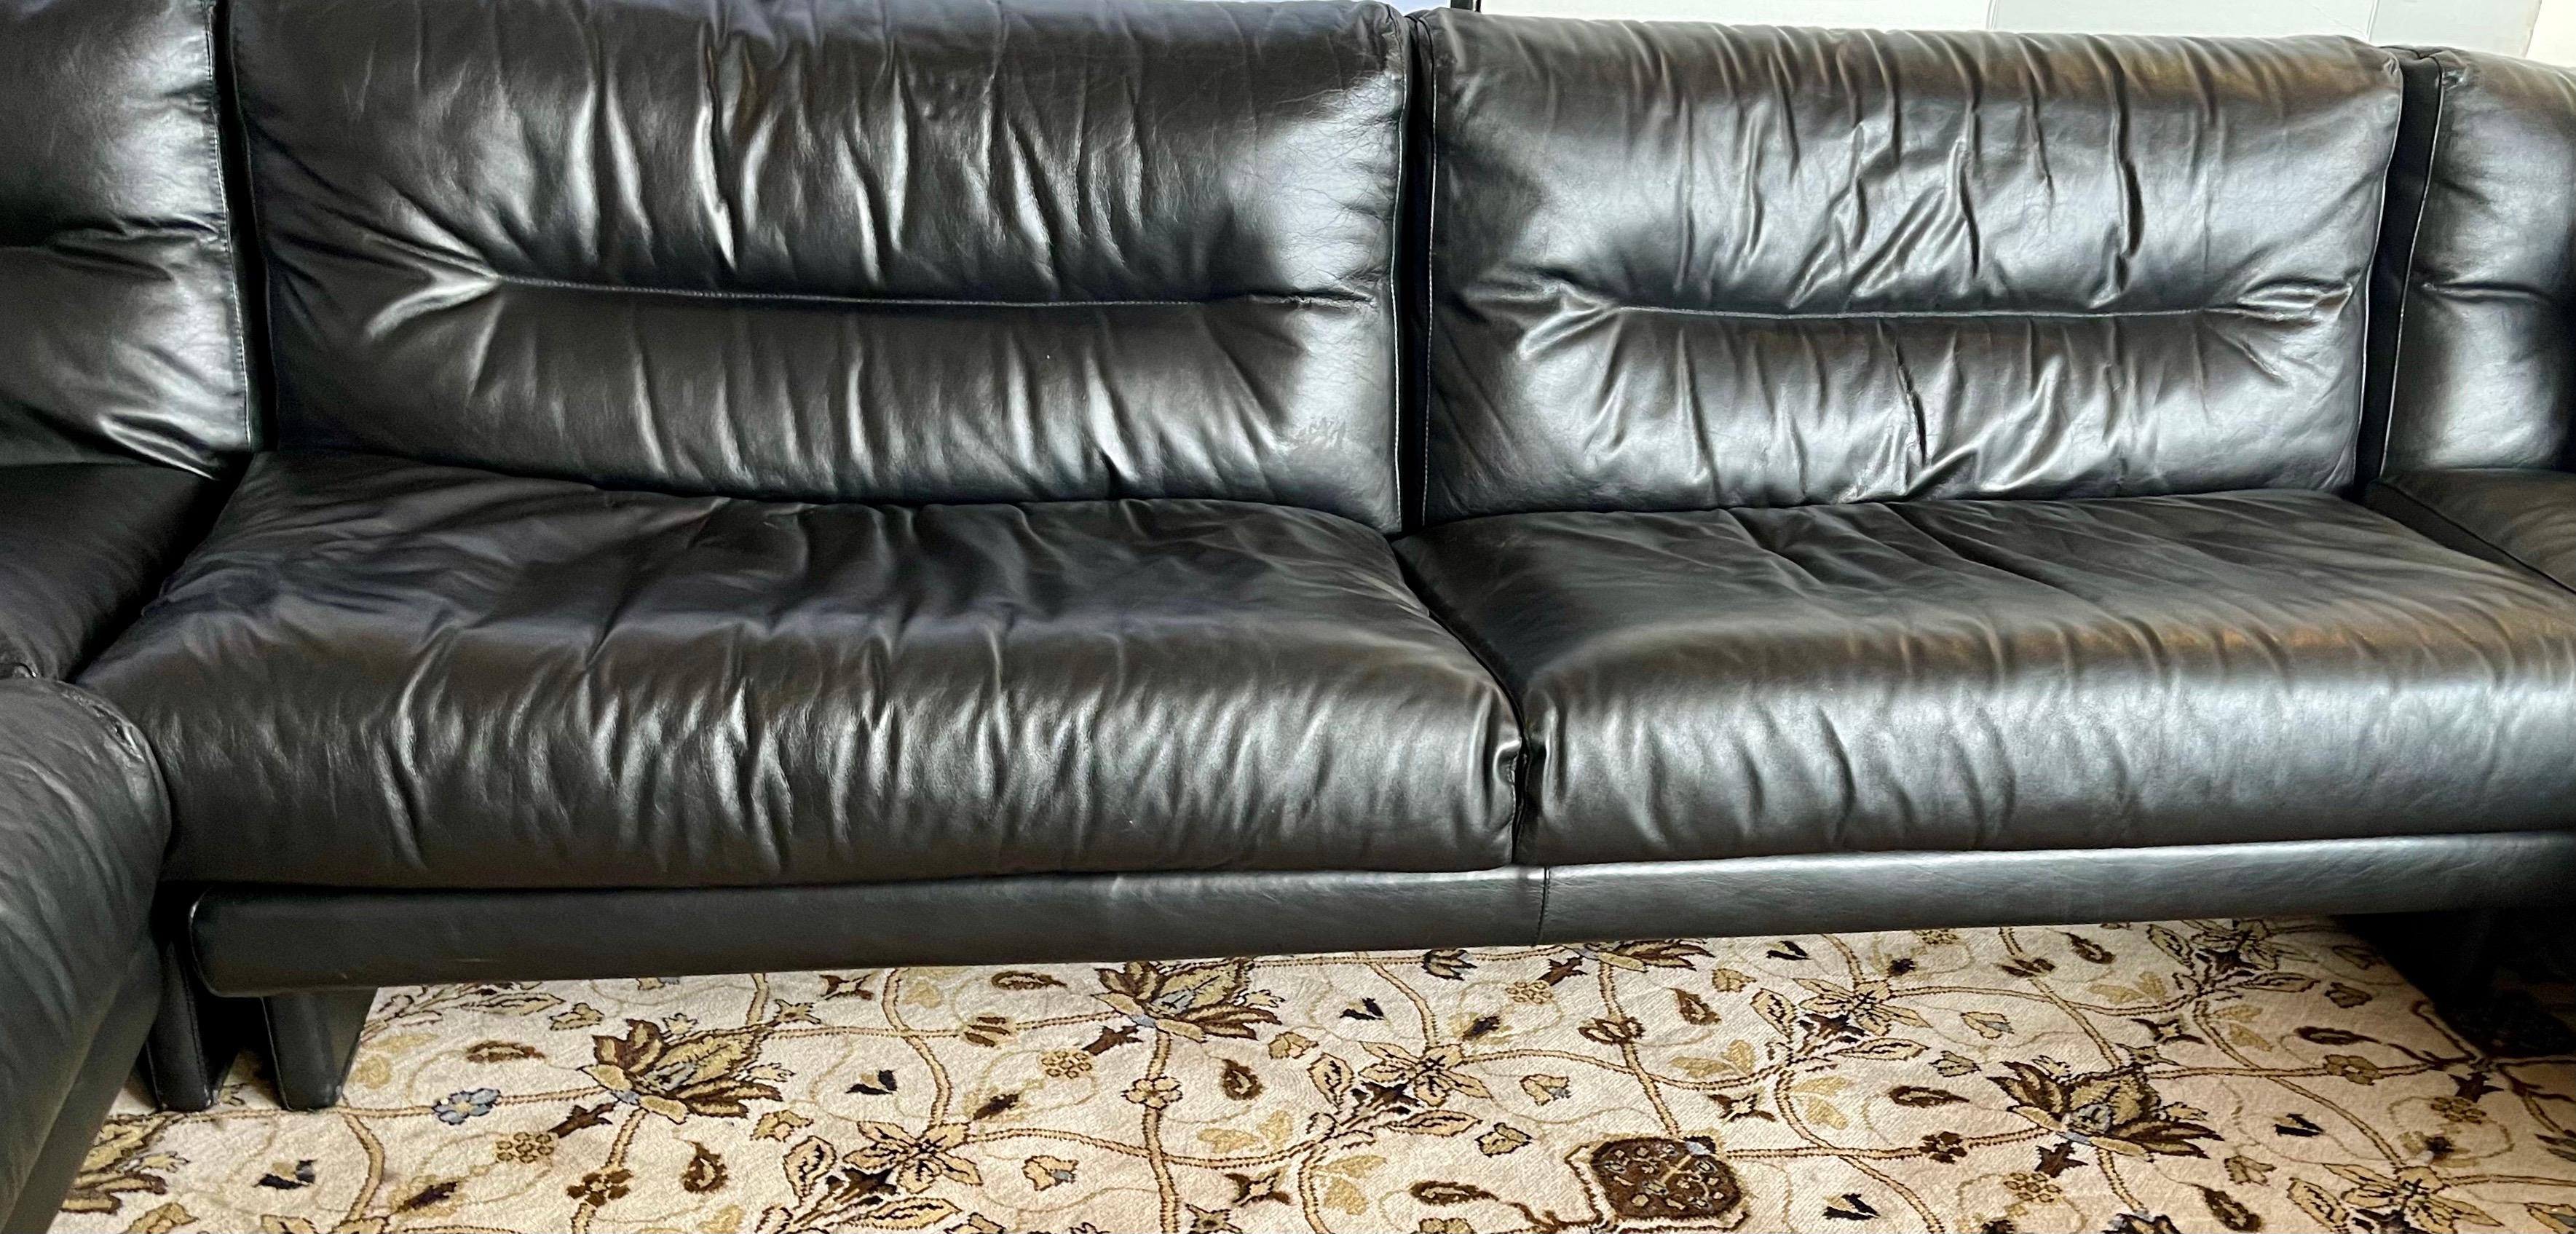 Authentic Saporiti Italia Large Sleek Black Leather Sofa Sectional Made in Italy 2